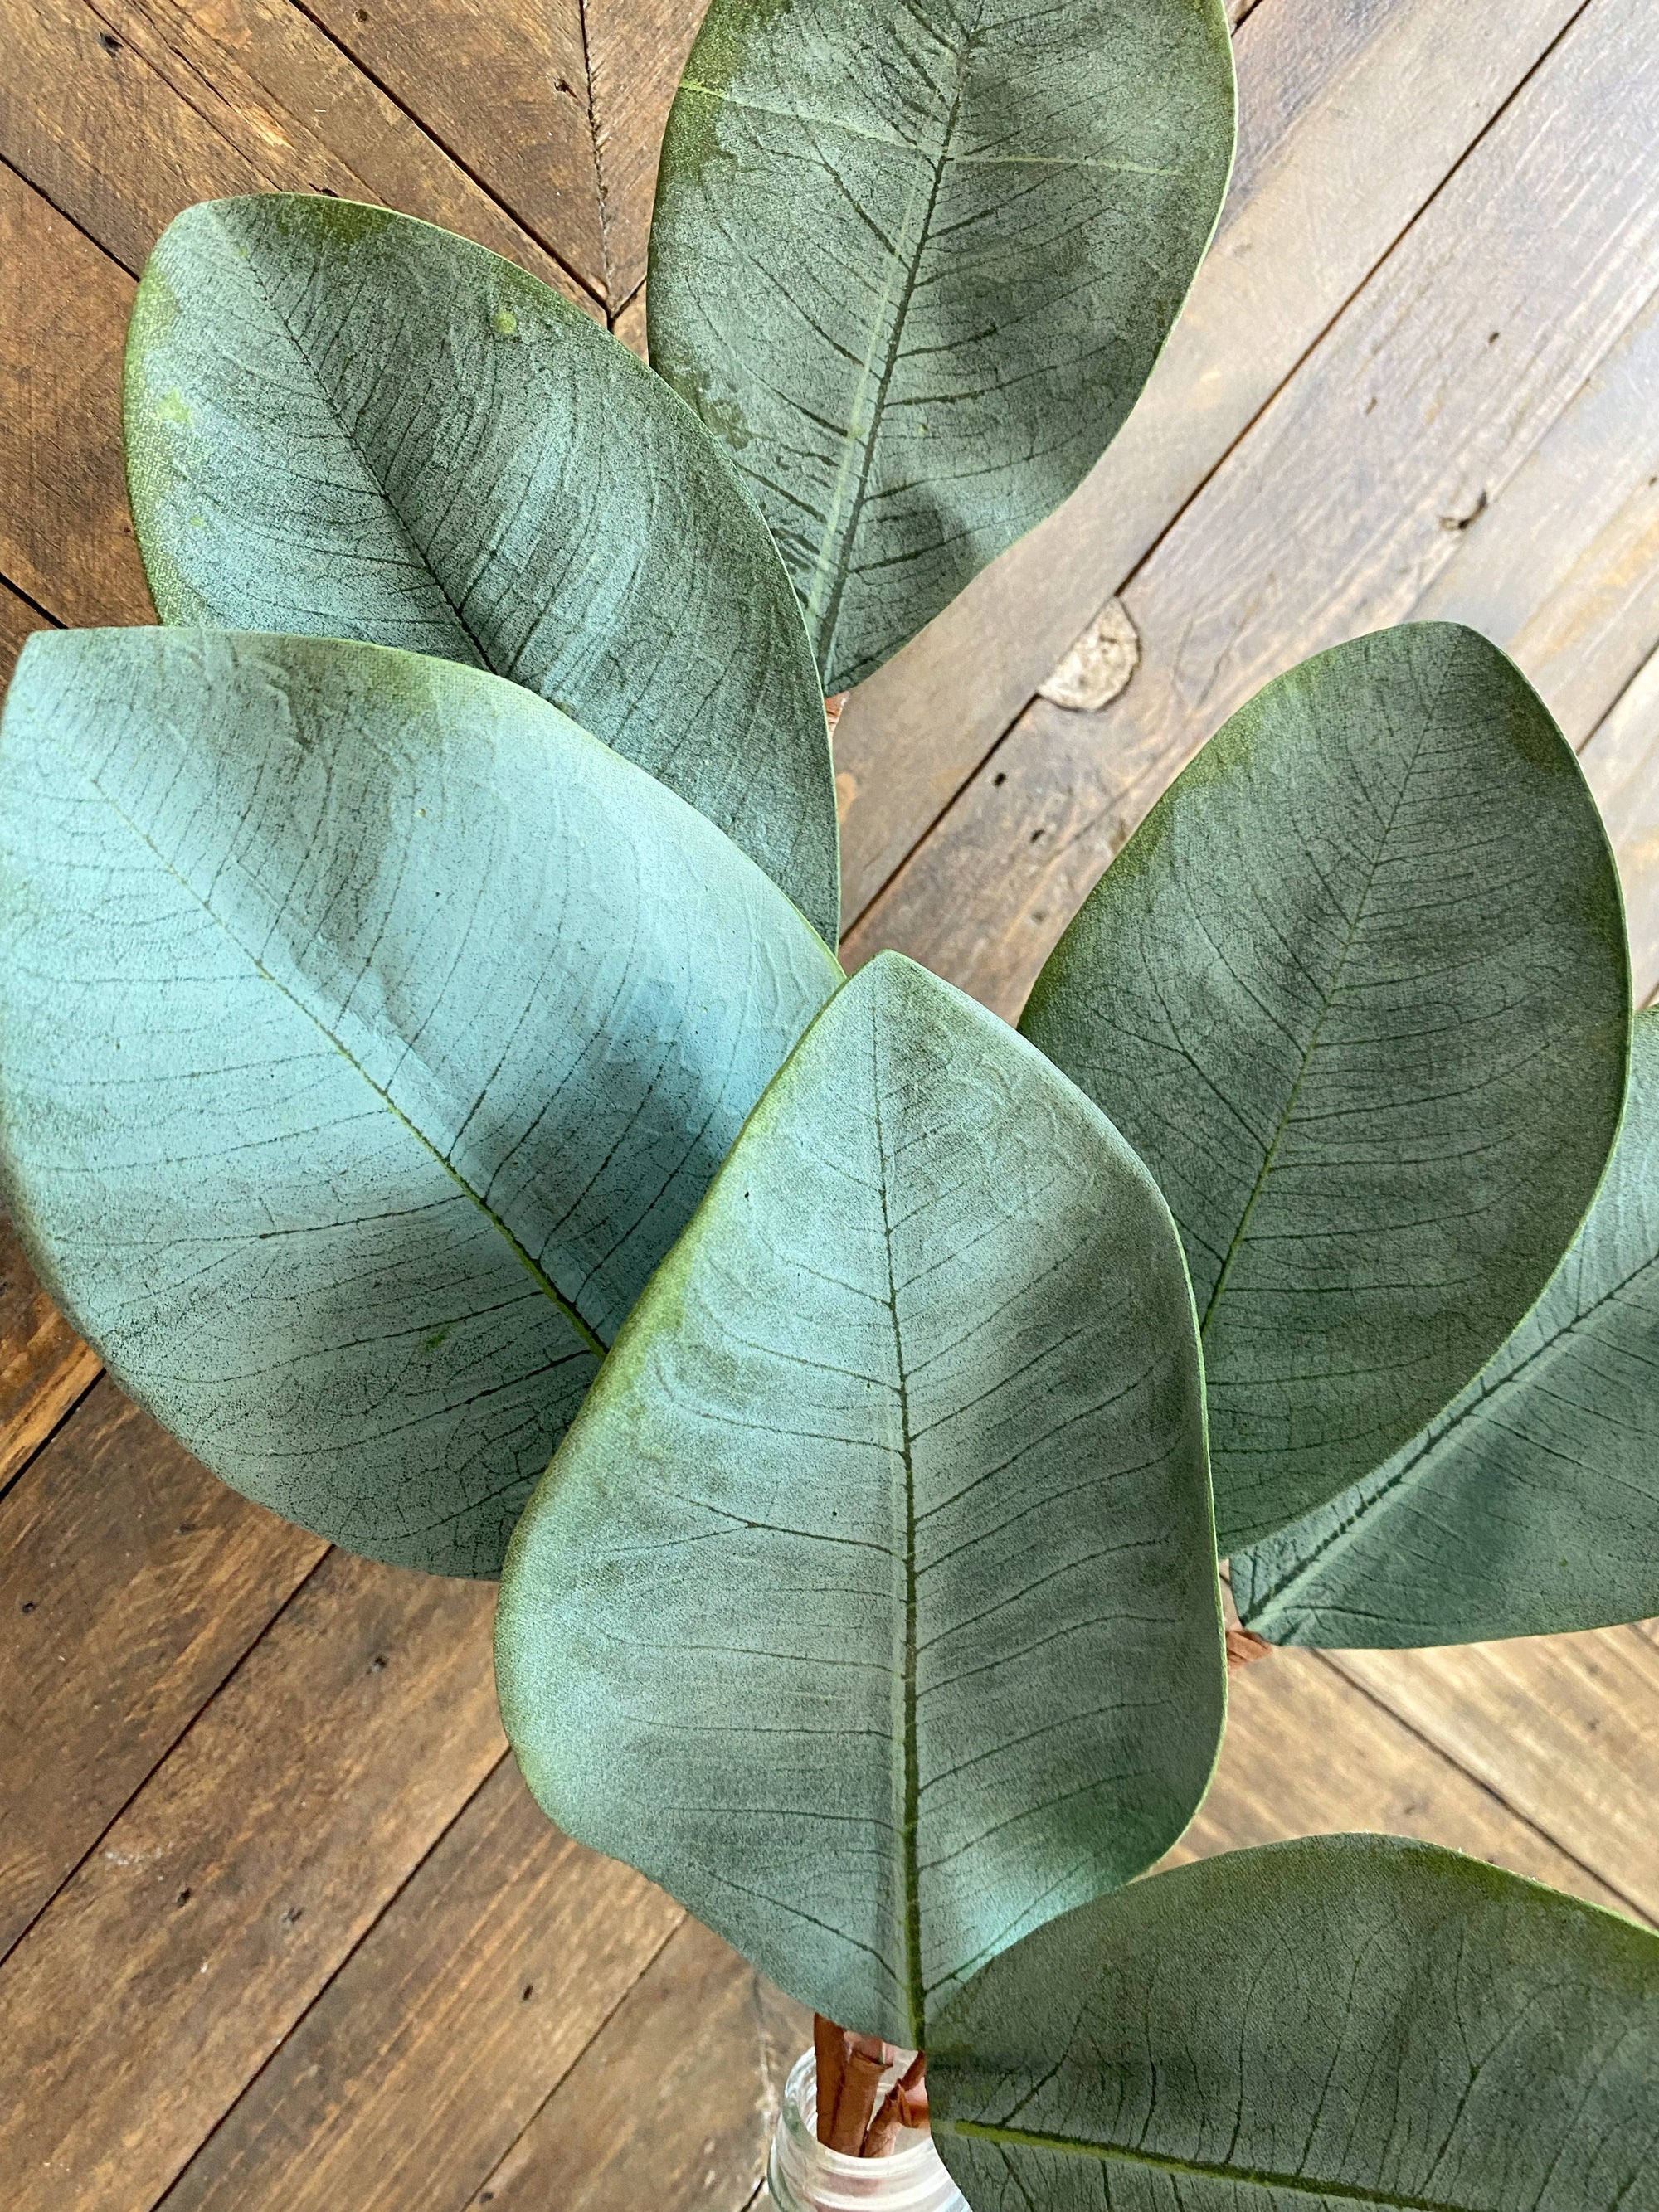 Medium Magnolia Leaves | Artificial Greenery